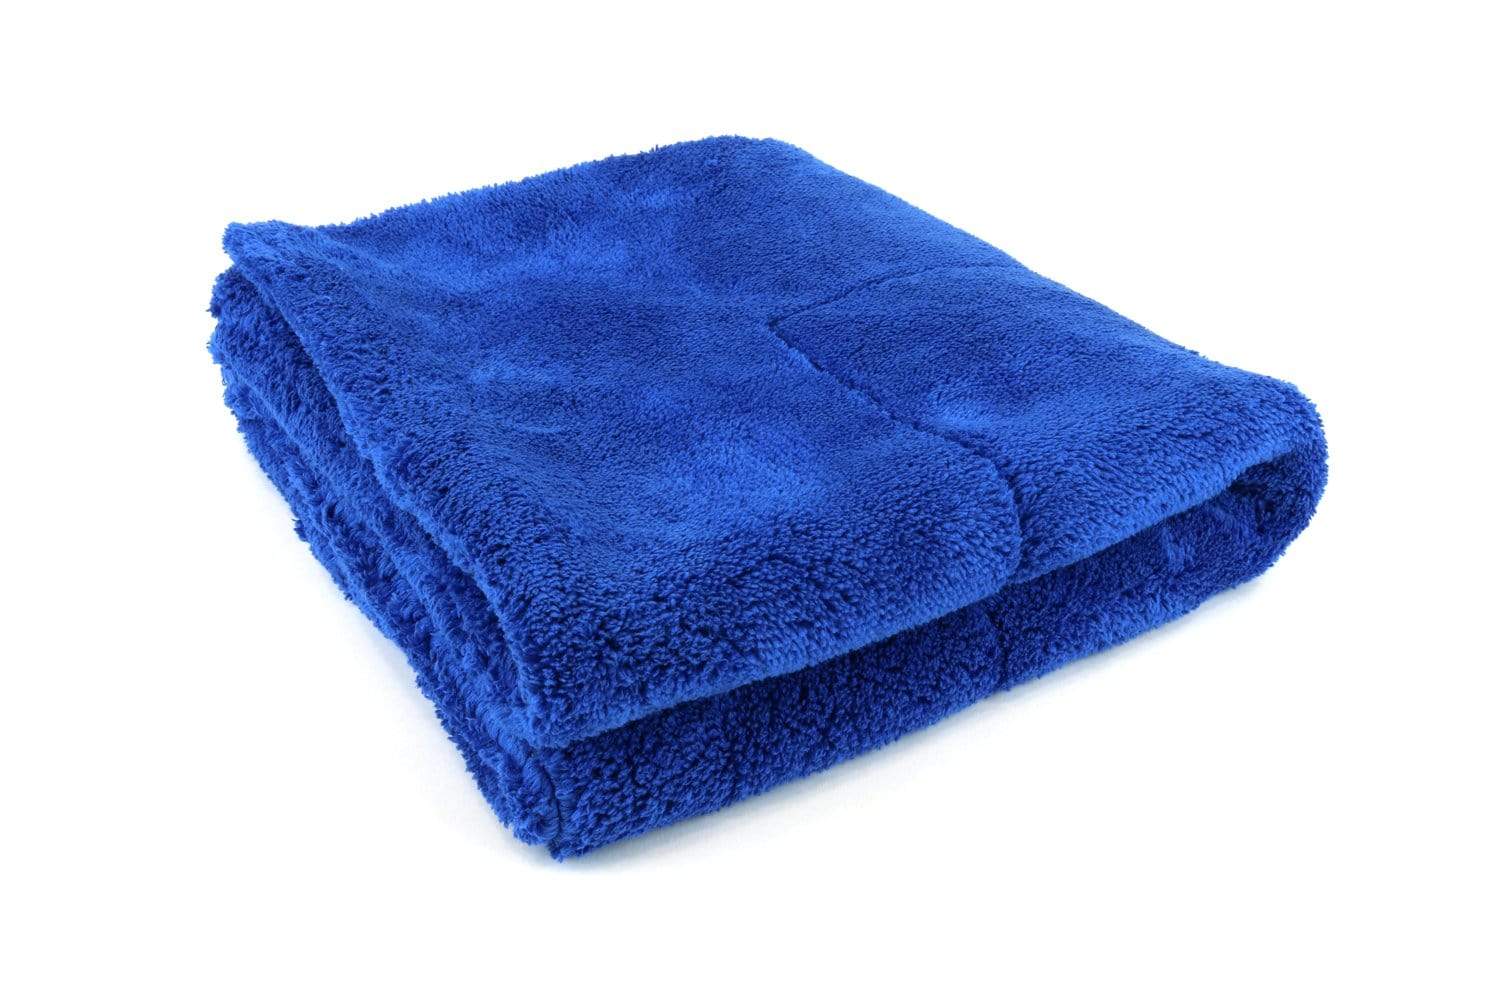 Autofiber Towel Blue FULL CASE [Motherfluffer XL] Plush Microfiber Drying Towel (22 in. x 22 in., 1100 gsm)- 30/ case